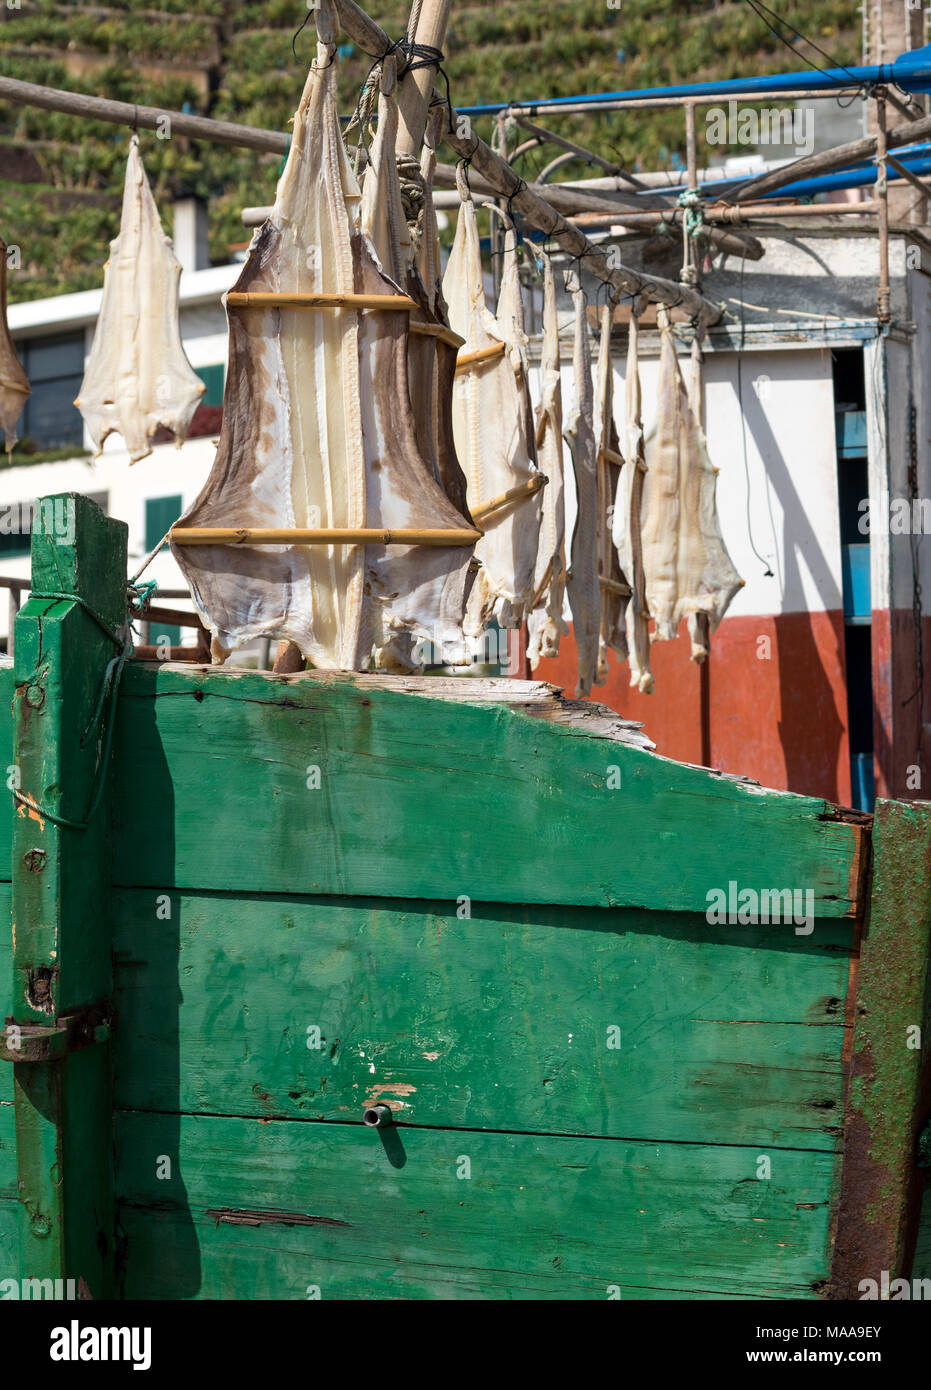 Cat fish or Cod fish drying in Camara de Lobos, Madiera Stock Photo